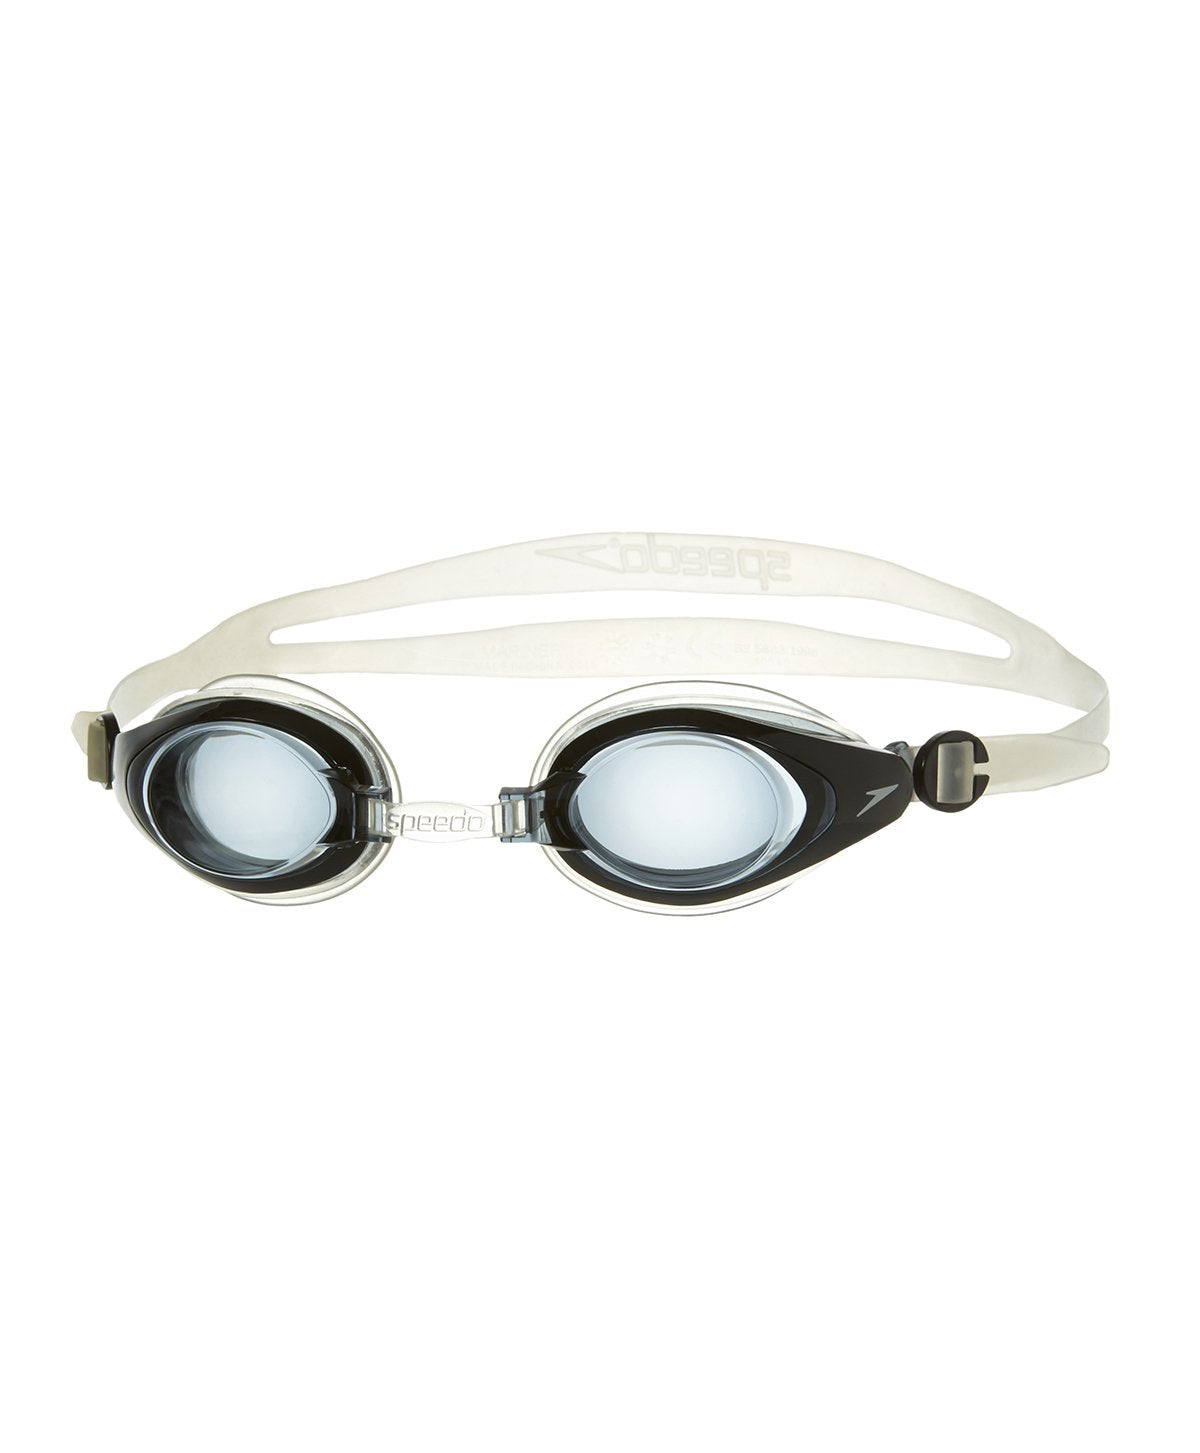 Speedo Unisex-Adult Mariner Optical Goggles - Best Price online Prokicksports.com